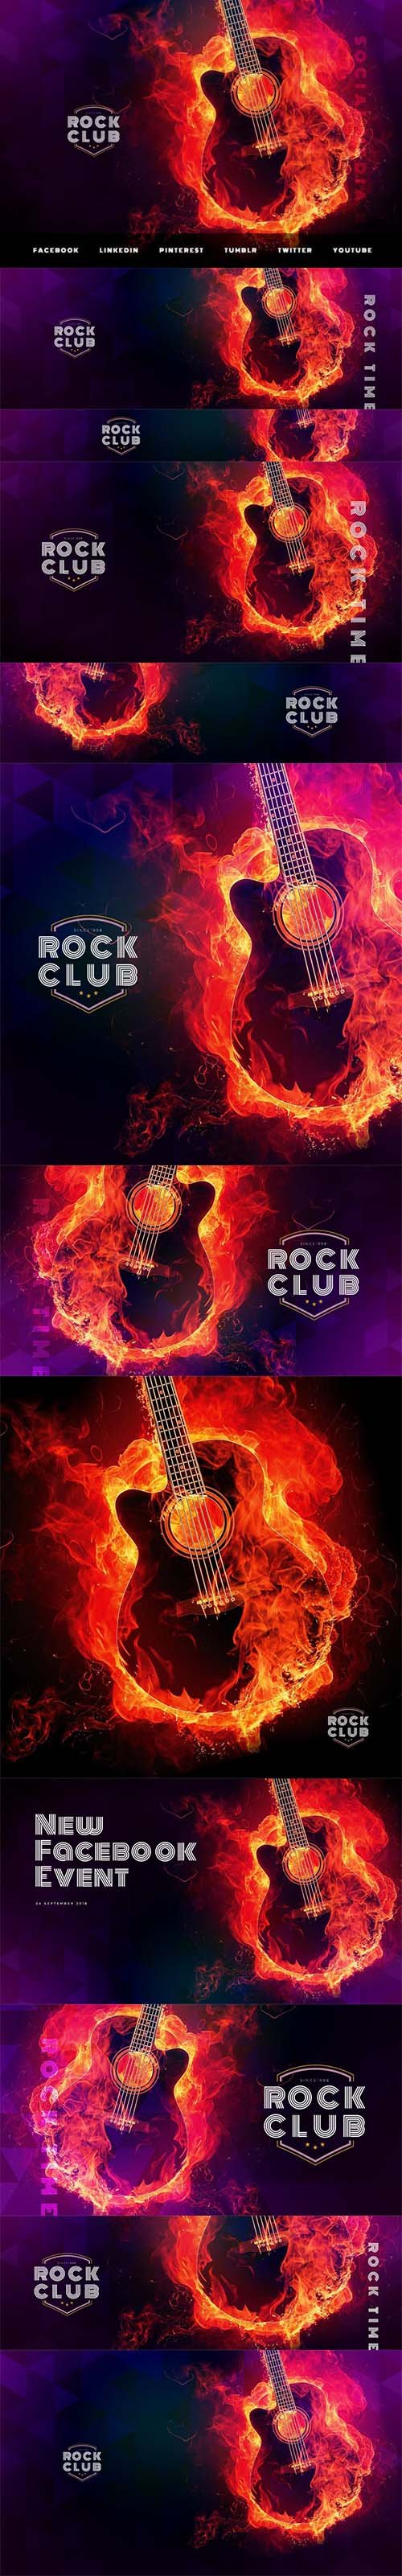 Rock Club & Party - Social Media Kit